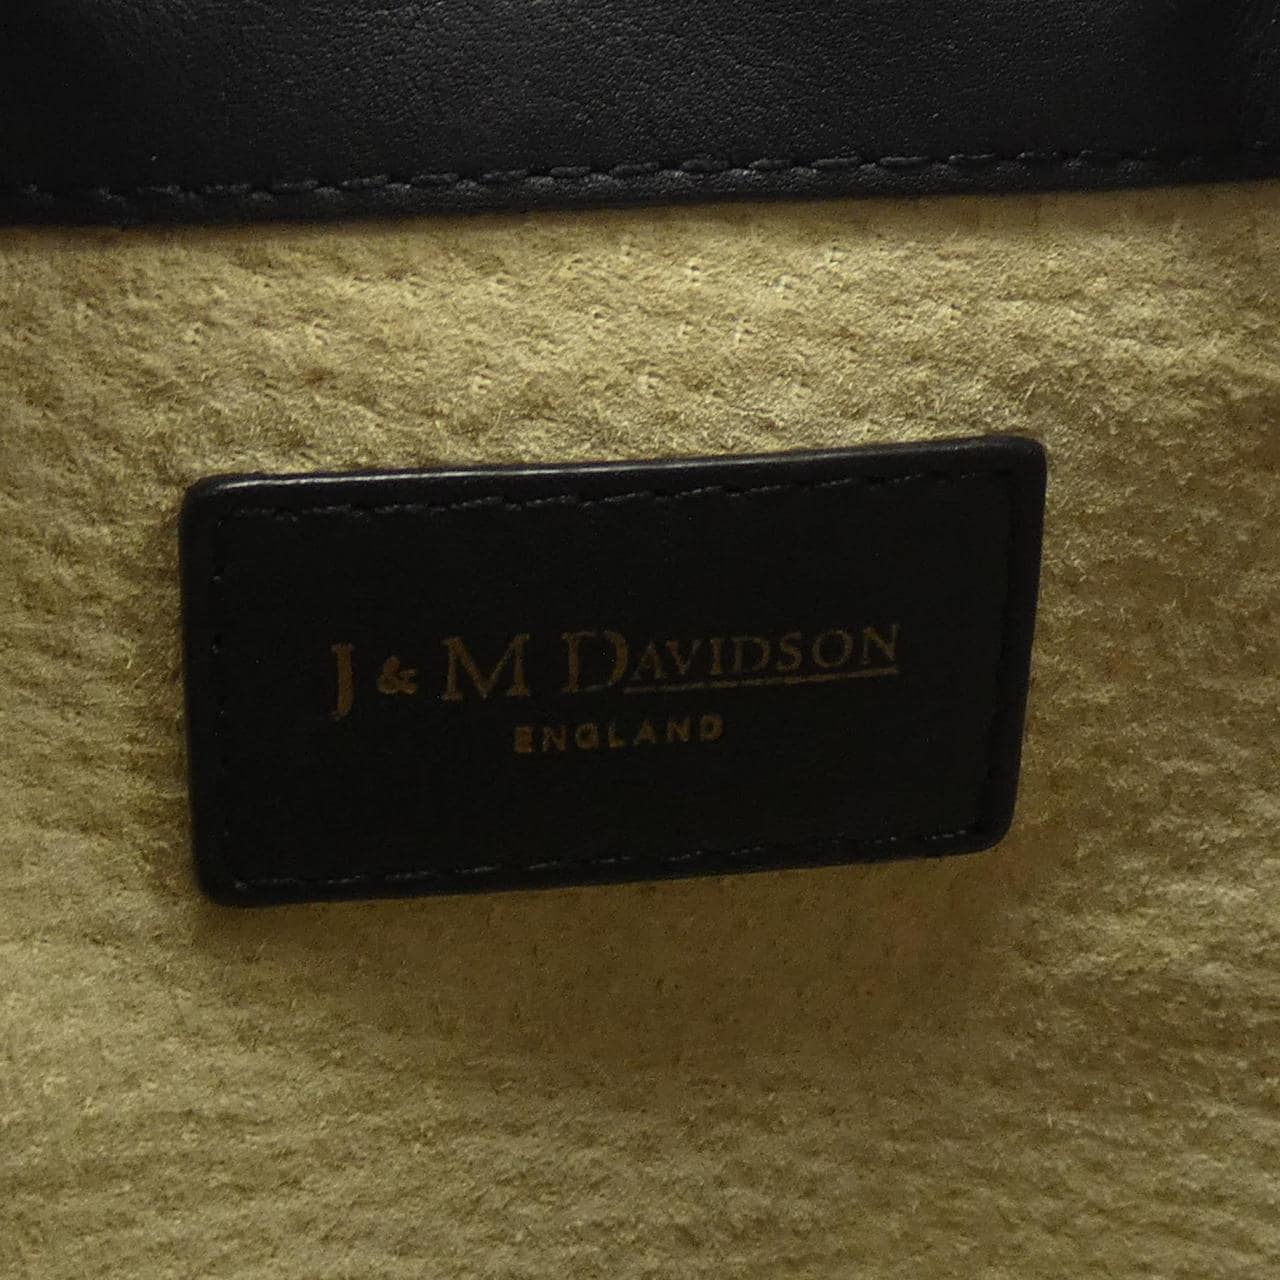 J&M DAVIDSON BAG